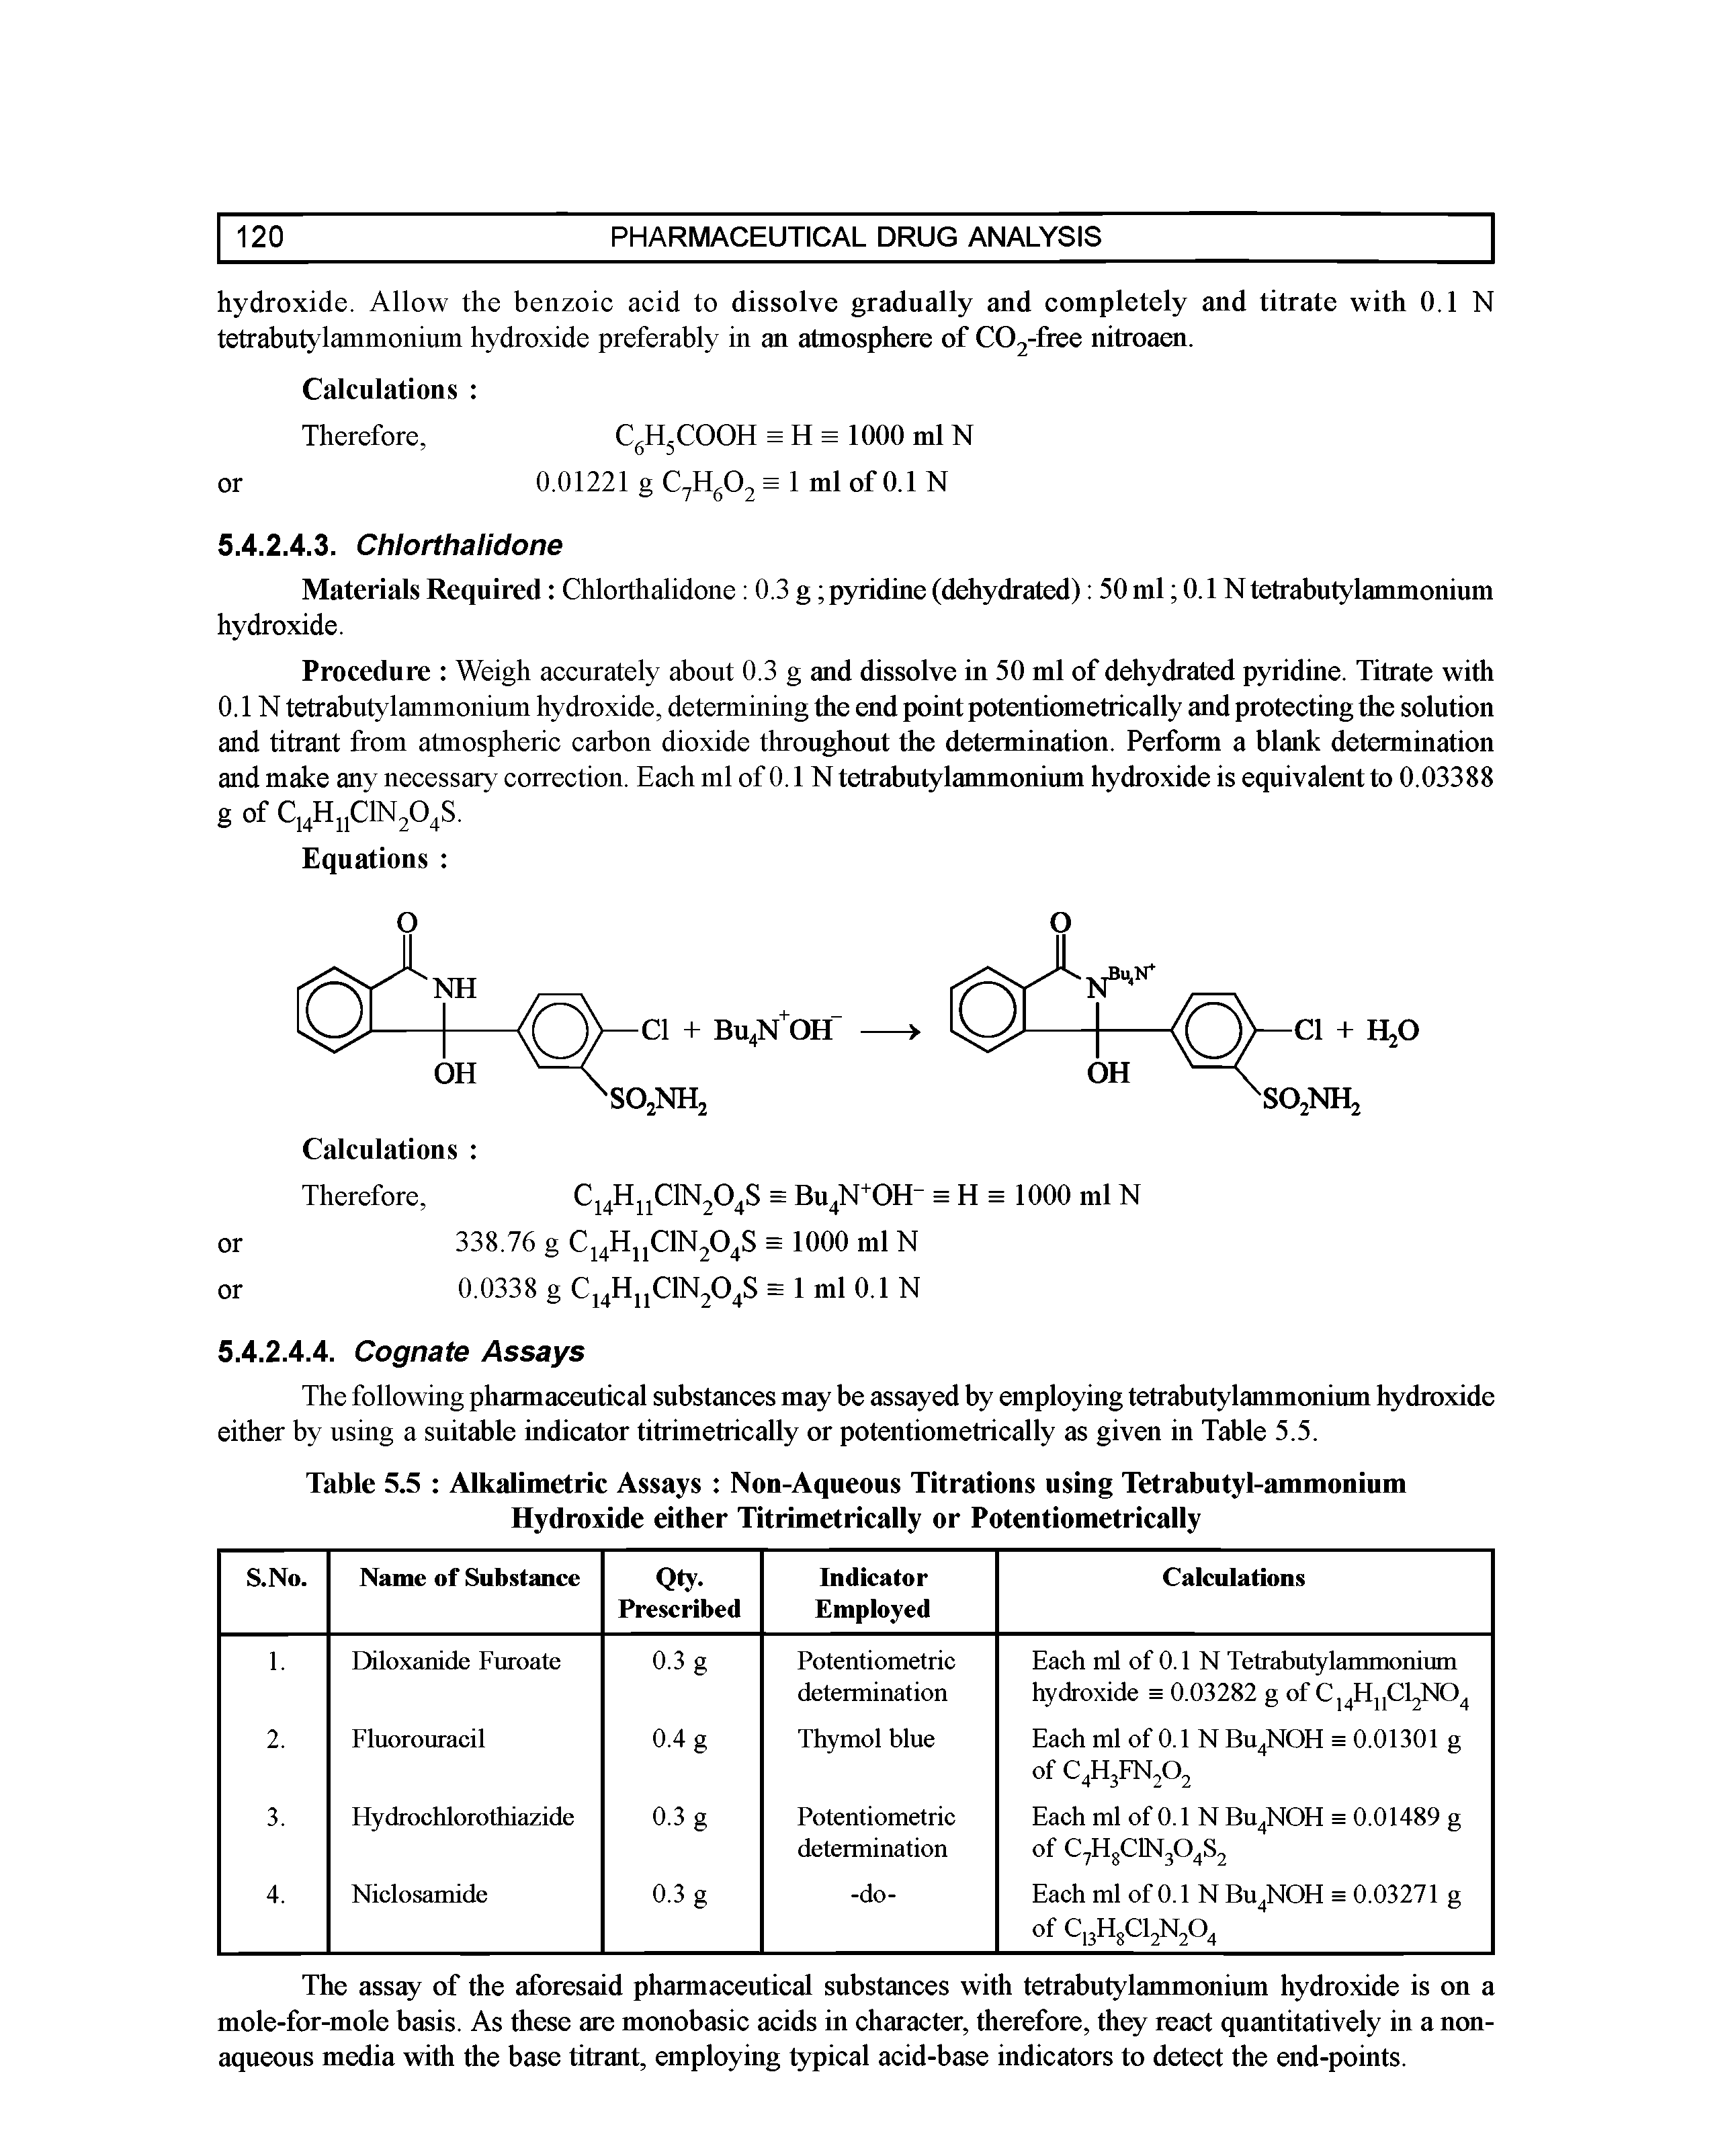 Table 5.5 Alkalimetric Assays Non-Aqueous Titrations using Tetrabutyl-ammonium Hydroxide either Titrimetrically or Potentiometrically...